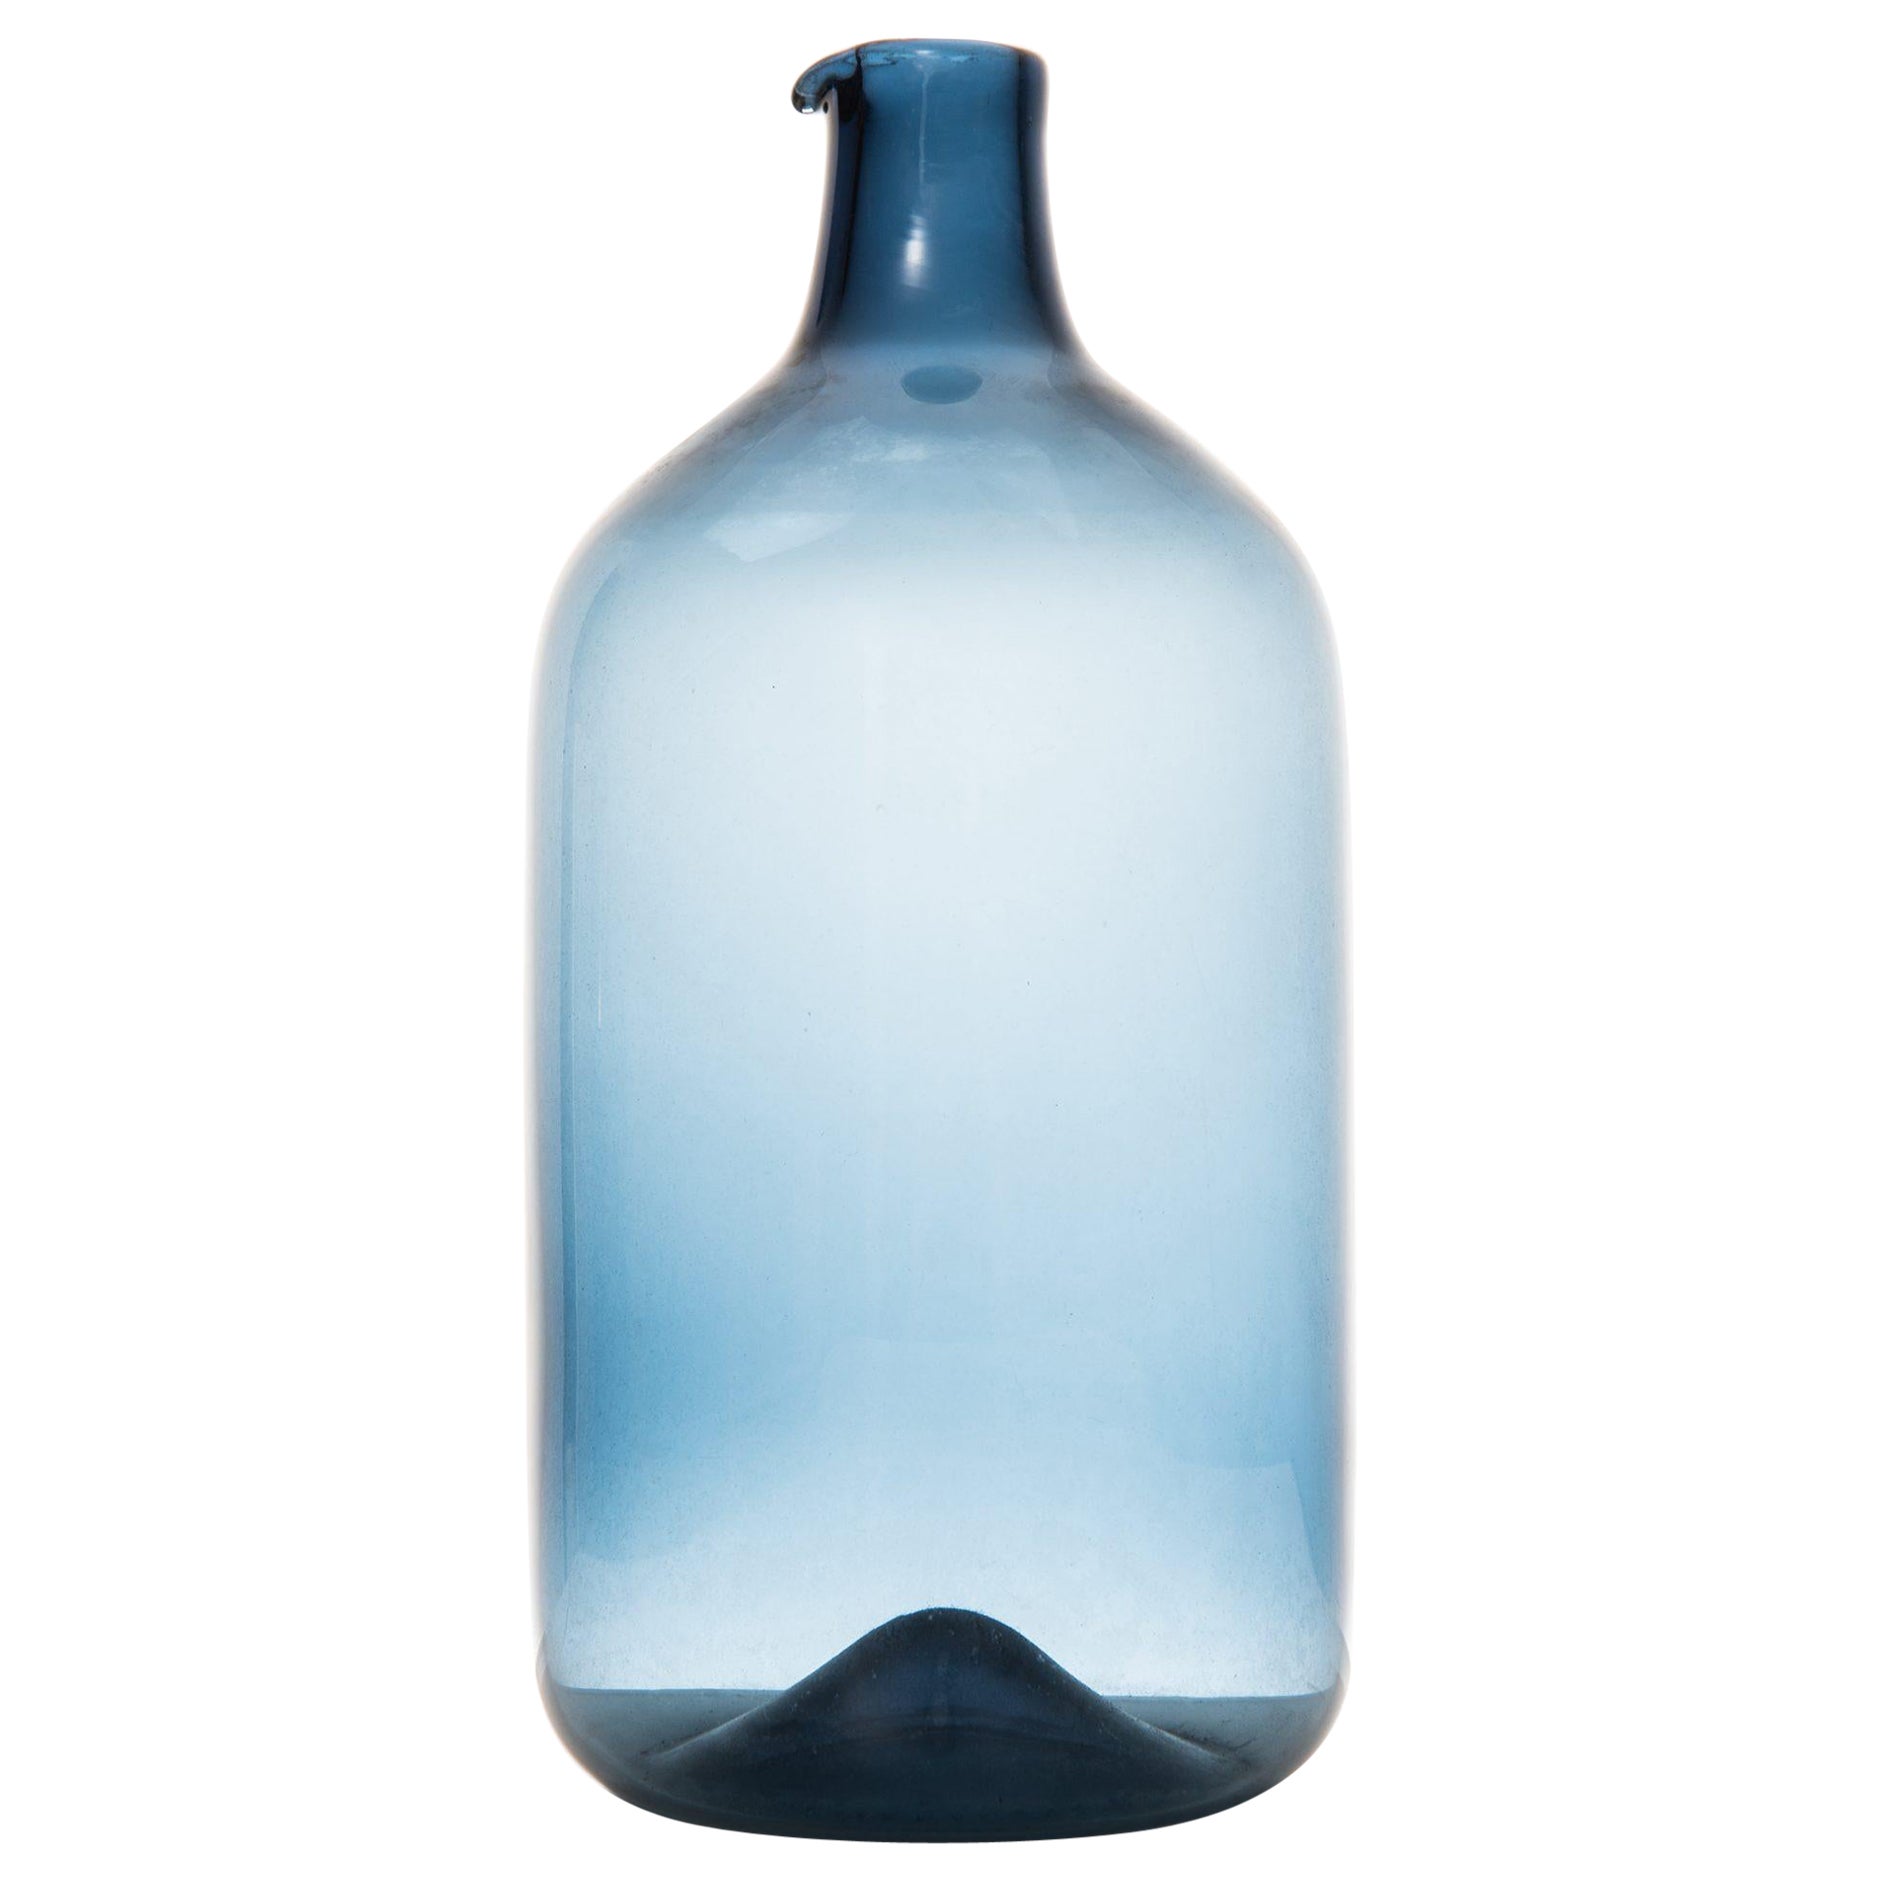 Timo Sarpaneva Bottle / Vase Model Pullo / Bird Vase by Iittala in Finland For Sale